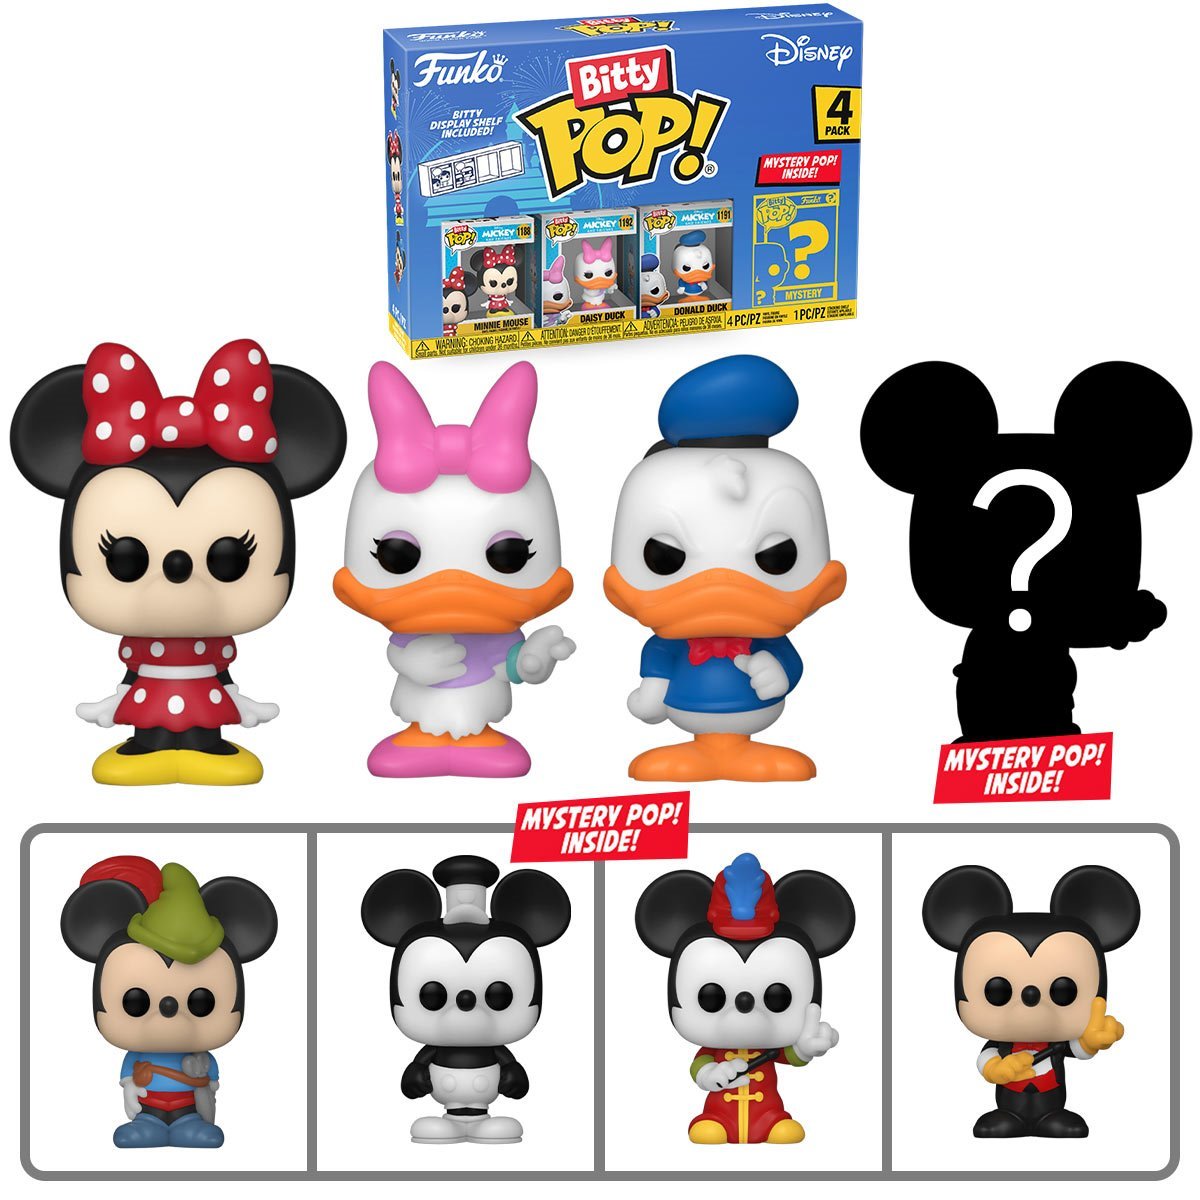 Pop! Disney Mickey and Friends (The Classics) Vinyl Figure Daisy